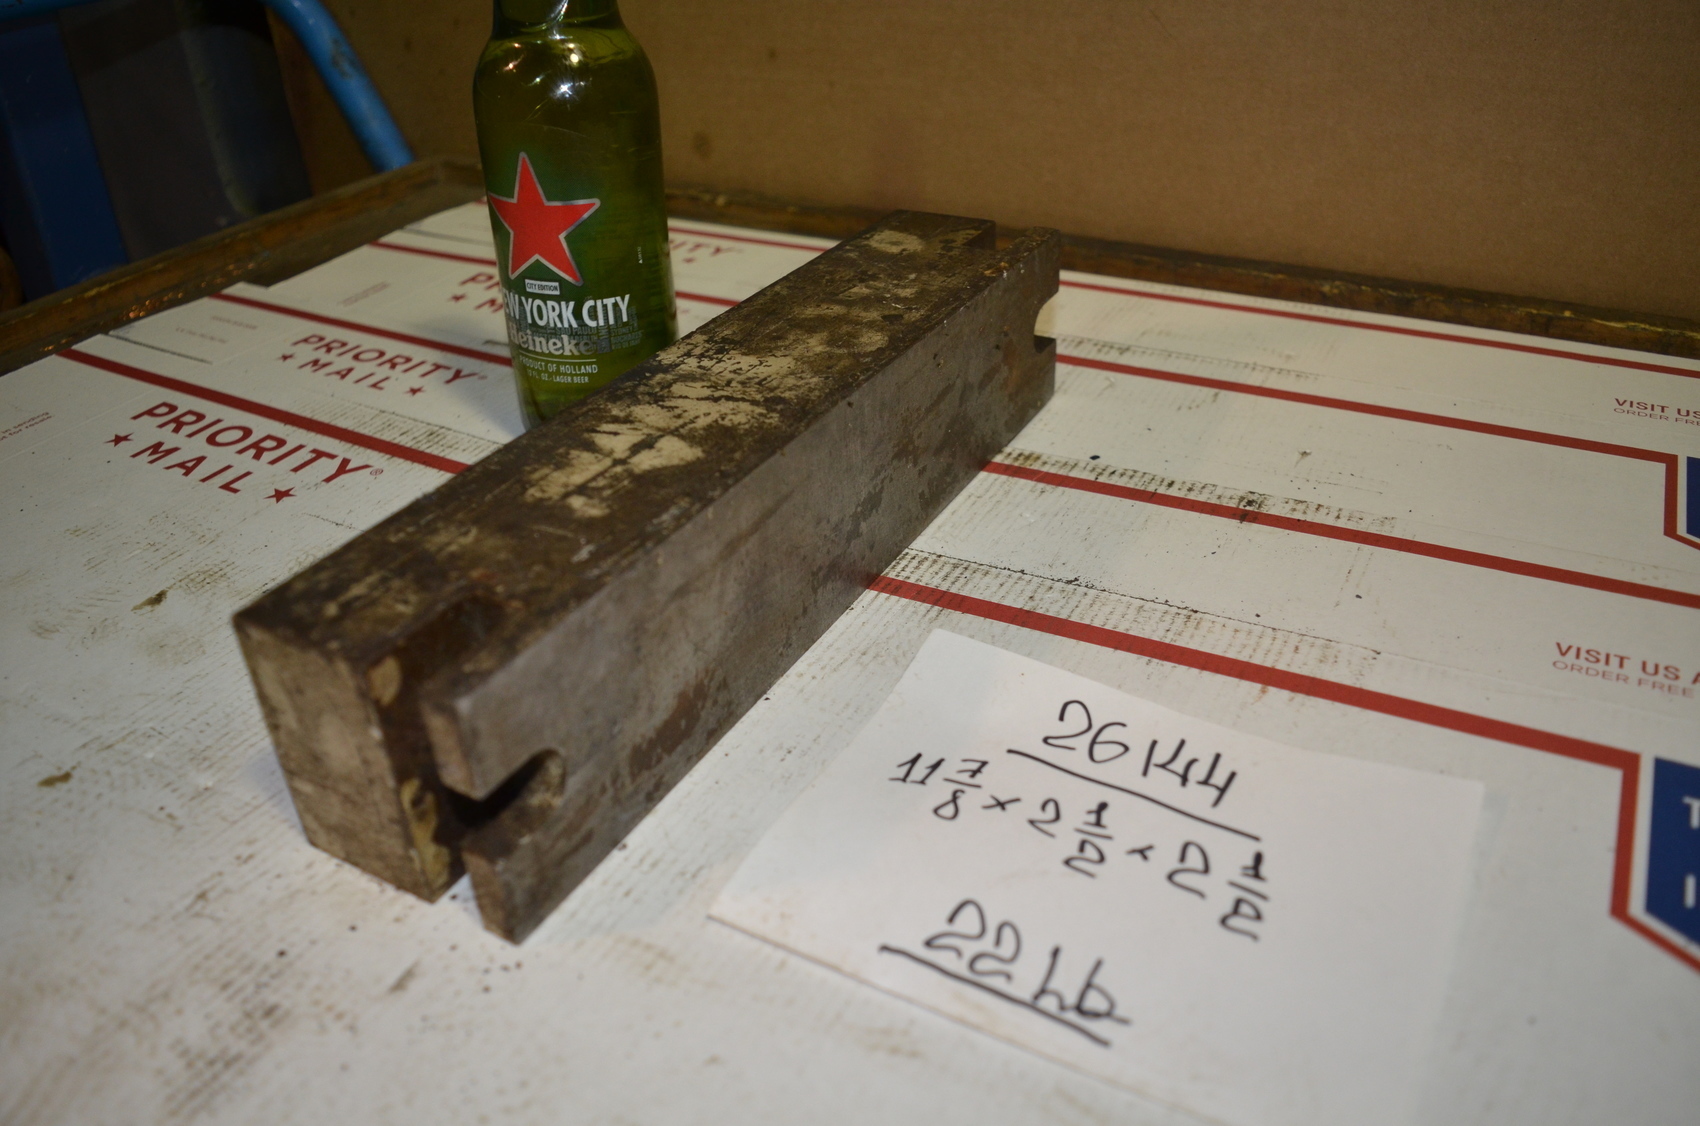 ONE steel Rectangular Bar for blacksmith tight down anvil,22 lbs